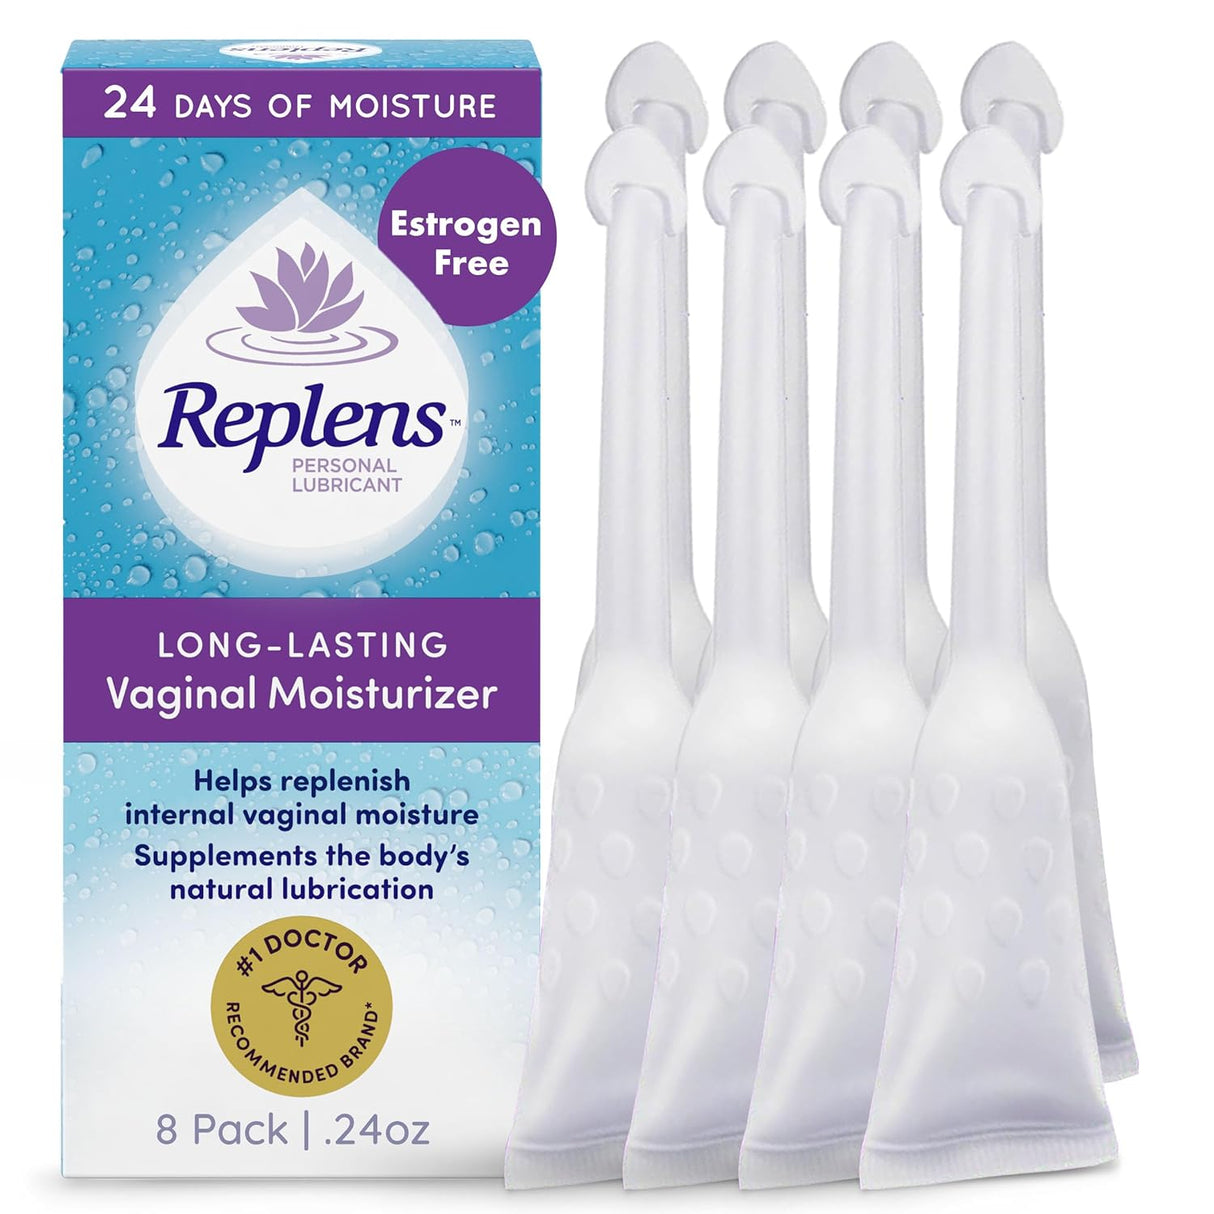 Replens Long-Lasting Vaginal Moisturizer 8 Pack